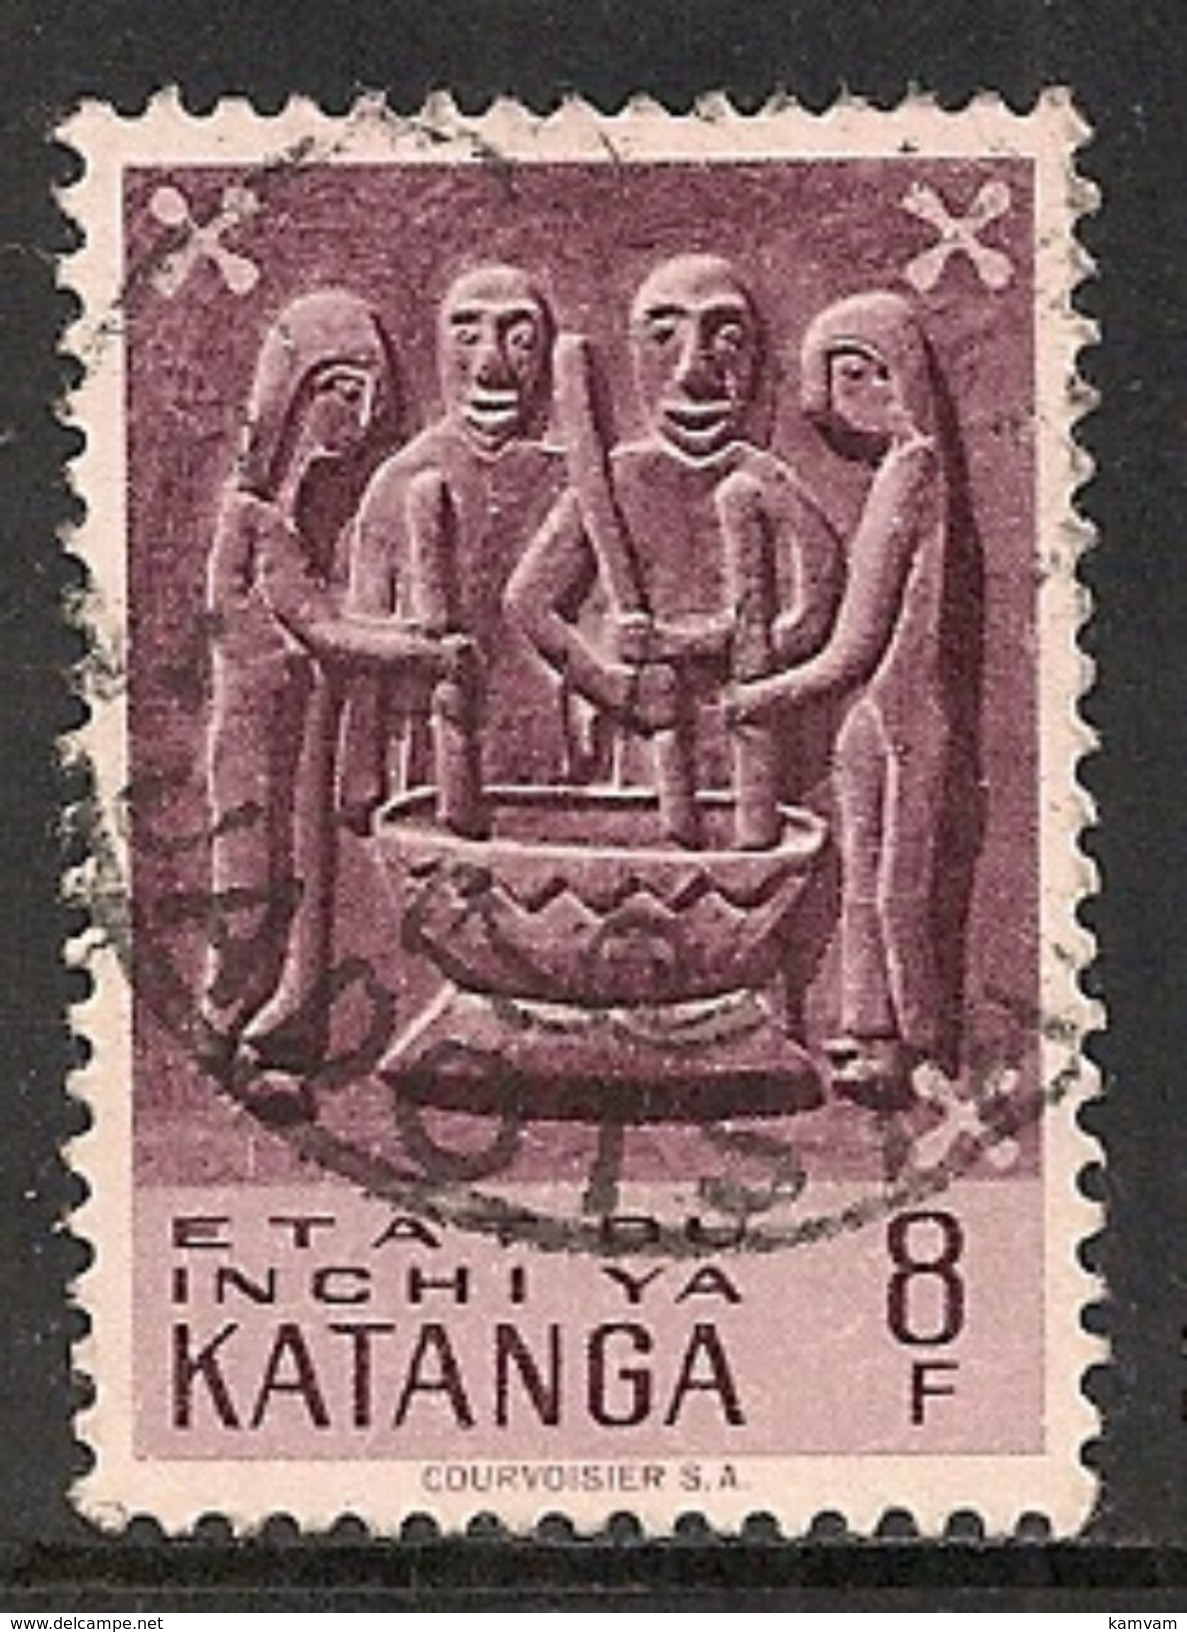 CONGO KATANGA 61 JADOTVILLE JADOTSTAD - Katanga